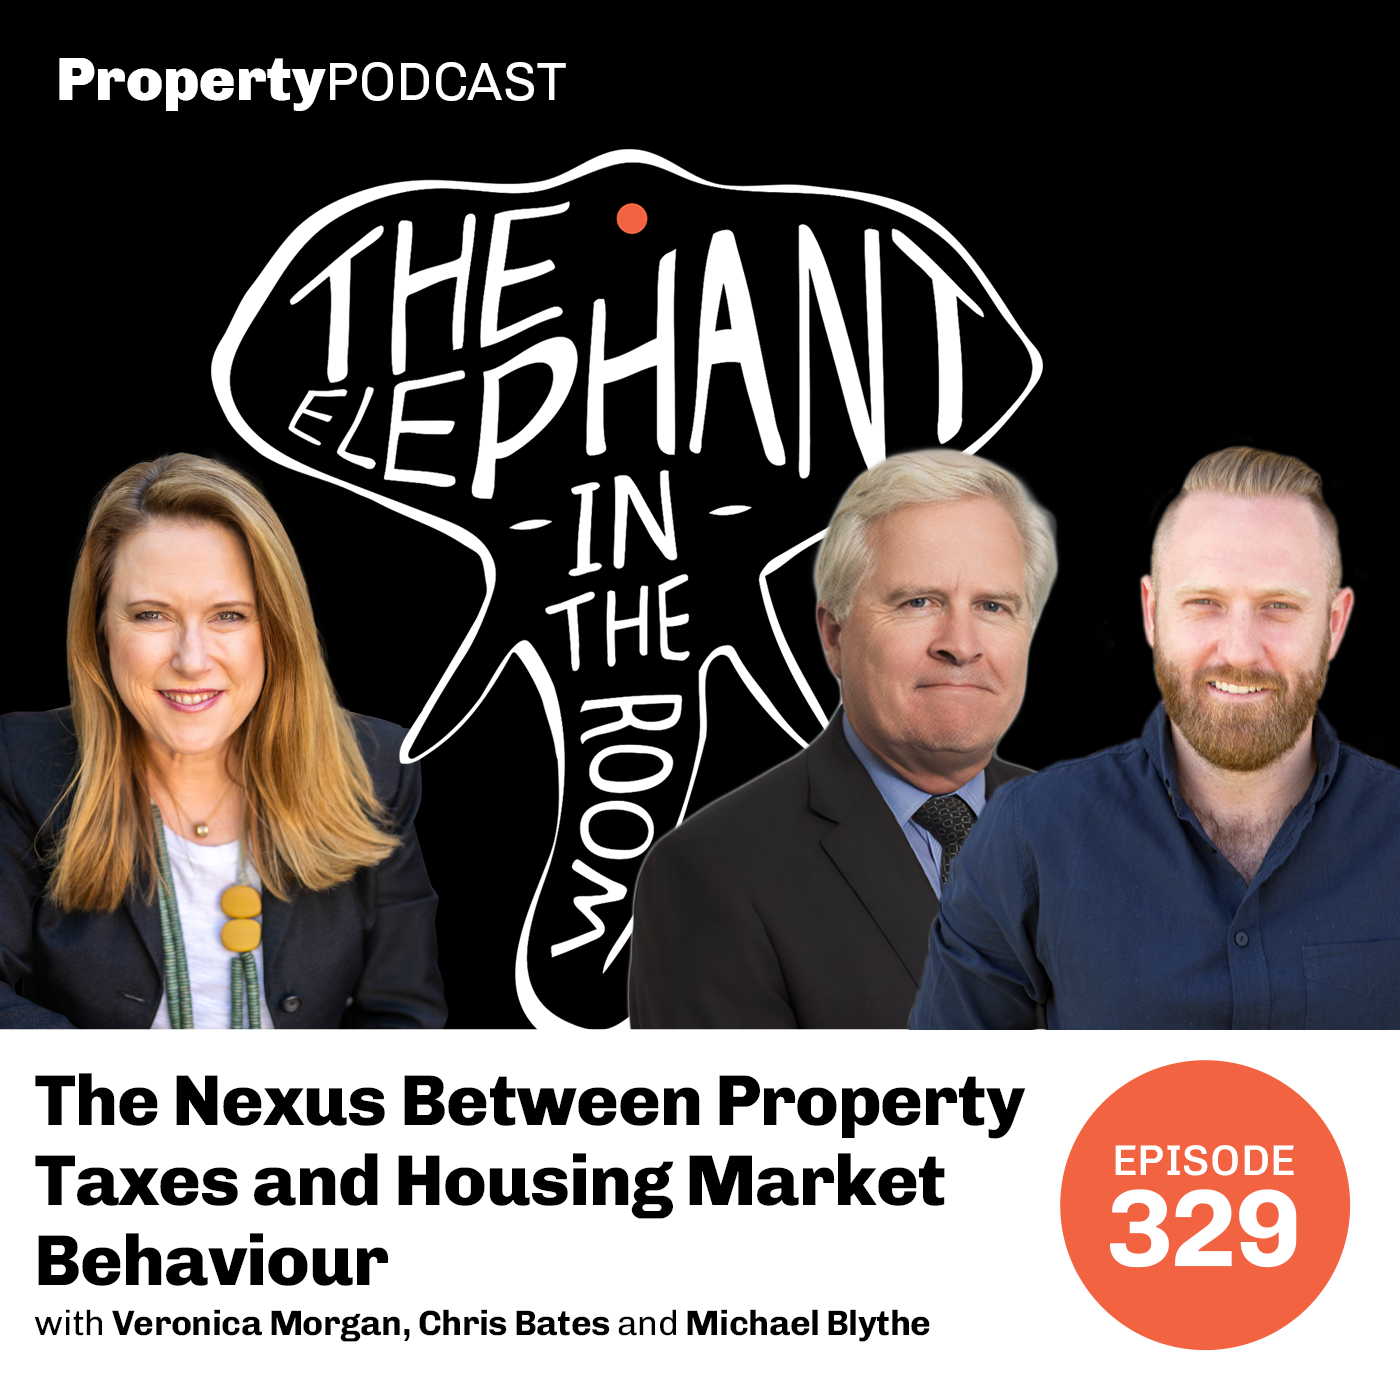 The Nexus Between Property Taxes and Housing Market Behaviour